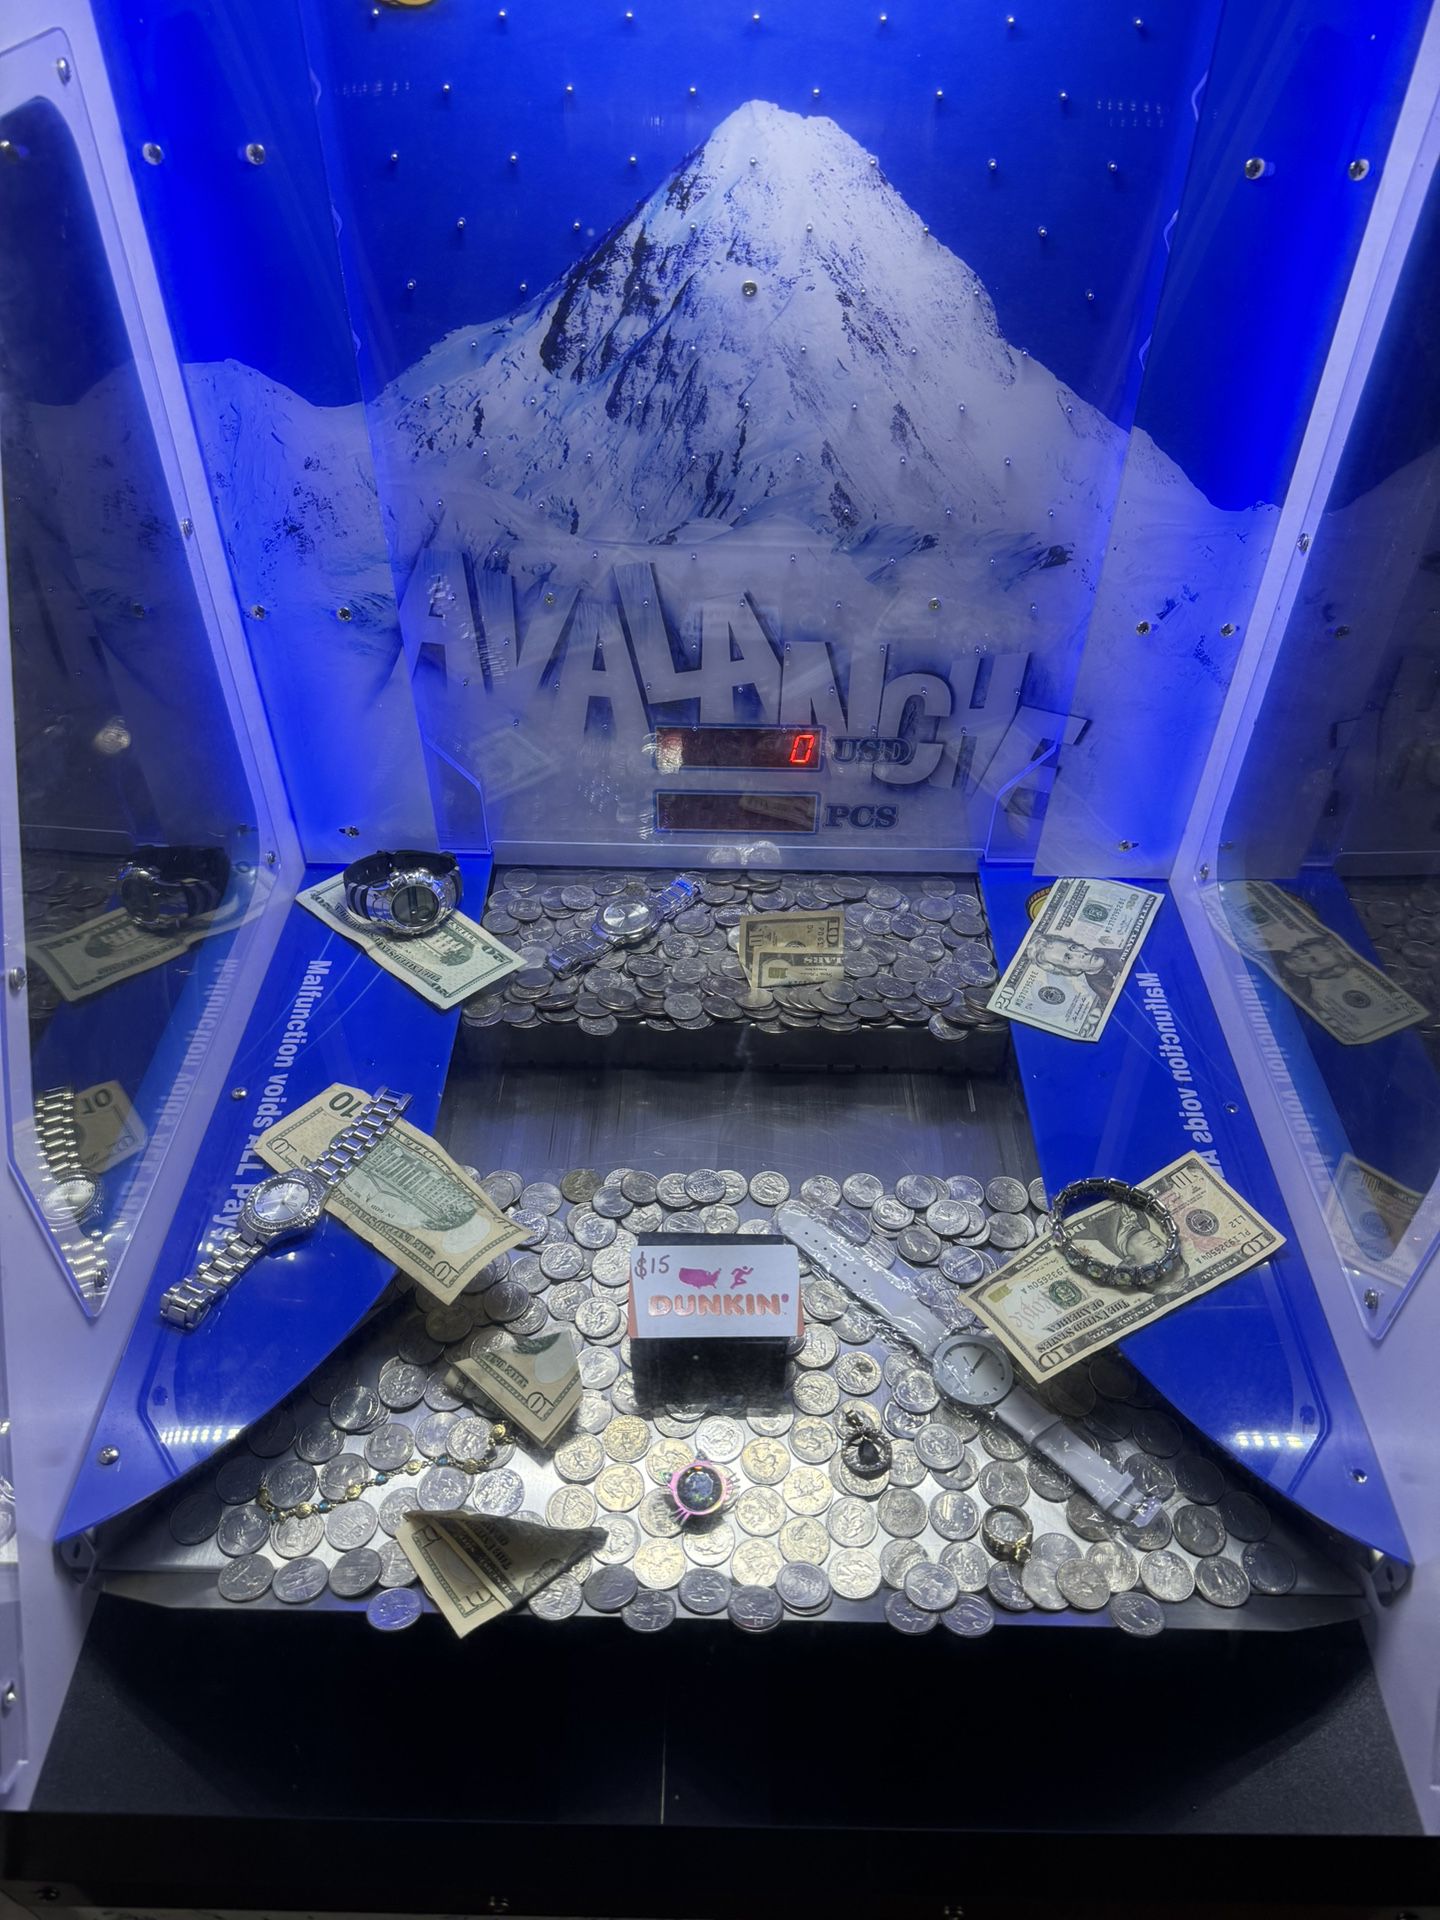 Avalanche Coin Machine